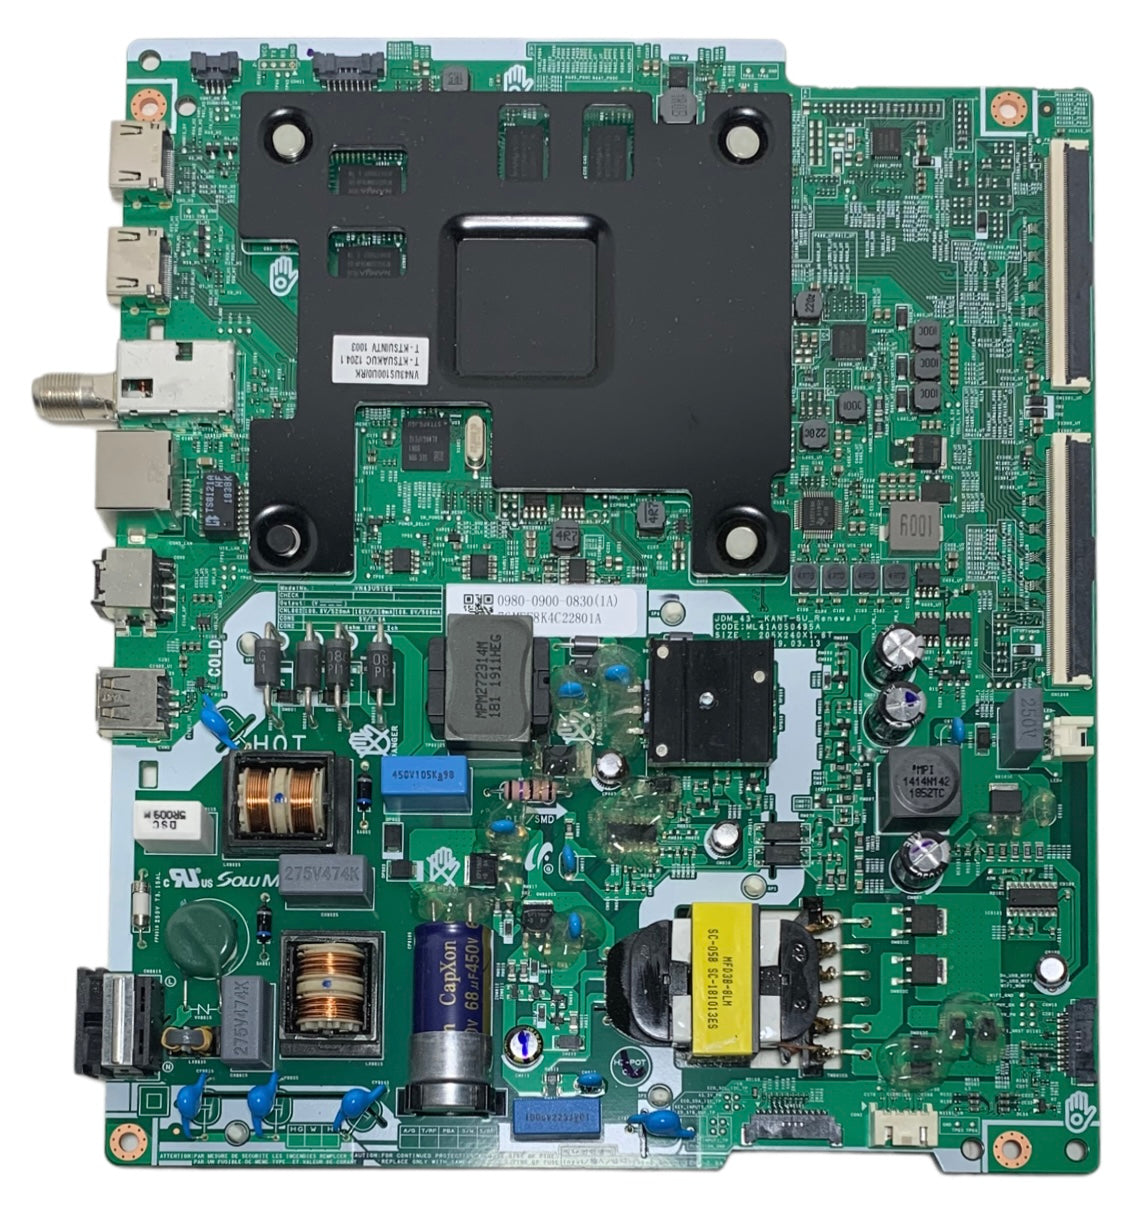 Samsung BN81-17875A (0980-0900-0830) Main Board/Power Supply for UN43NU6900FXZA (Version RZ03)